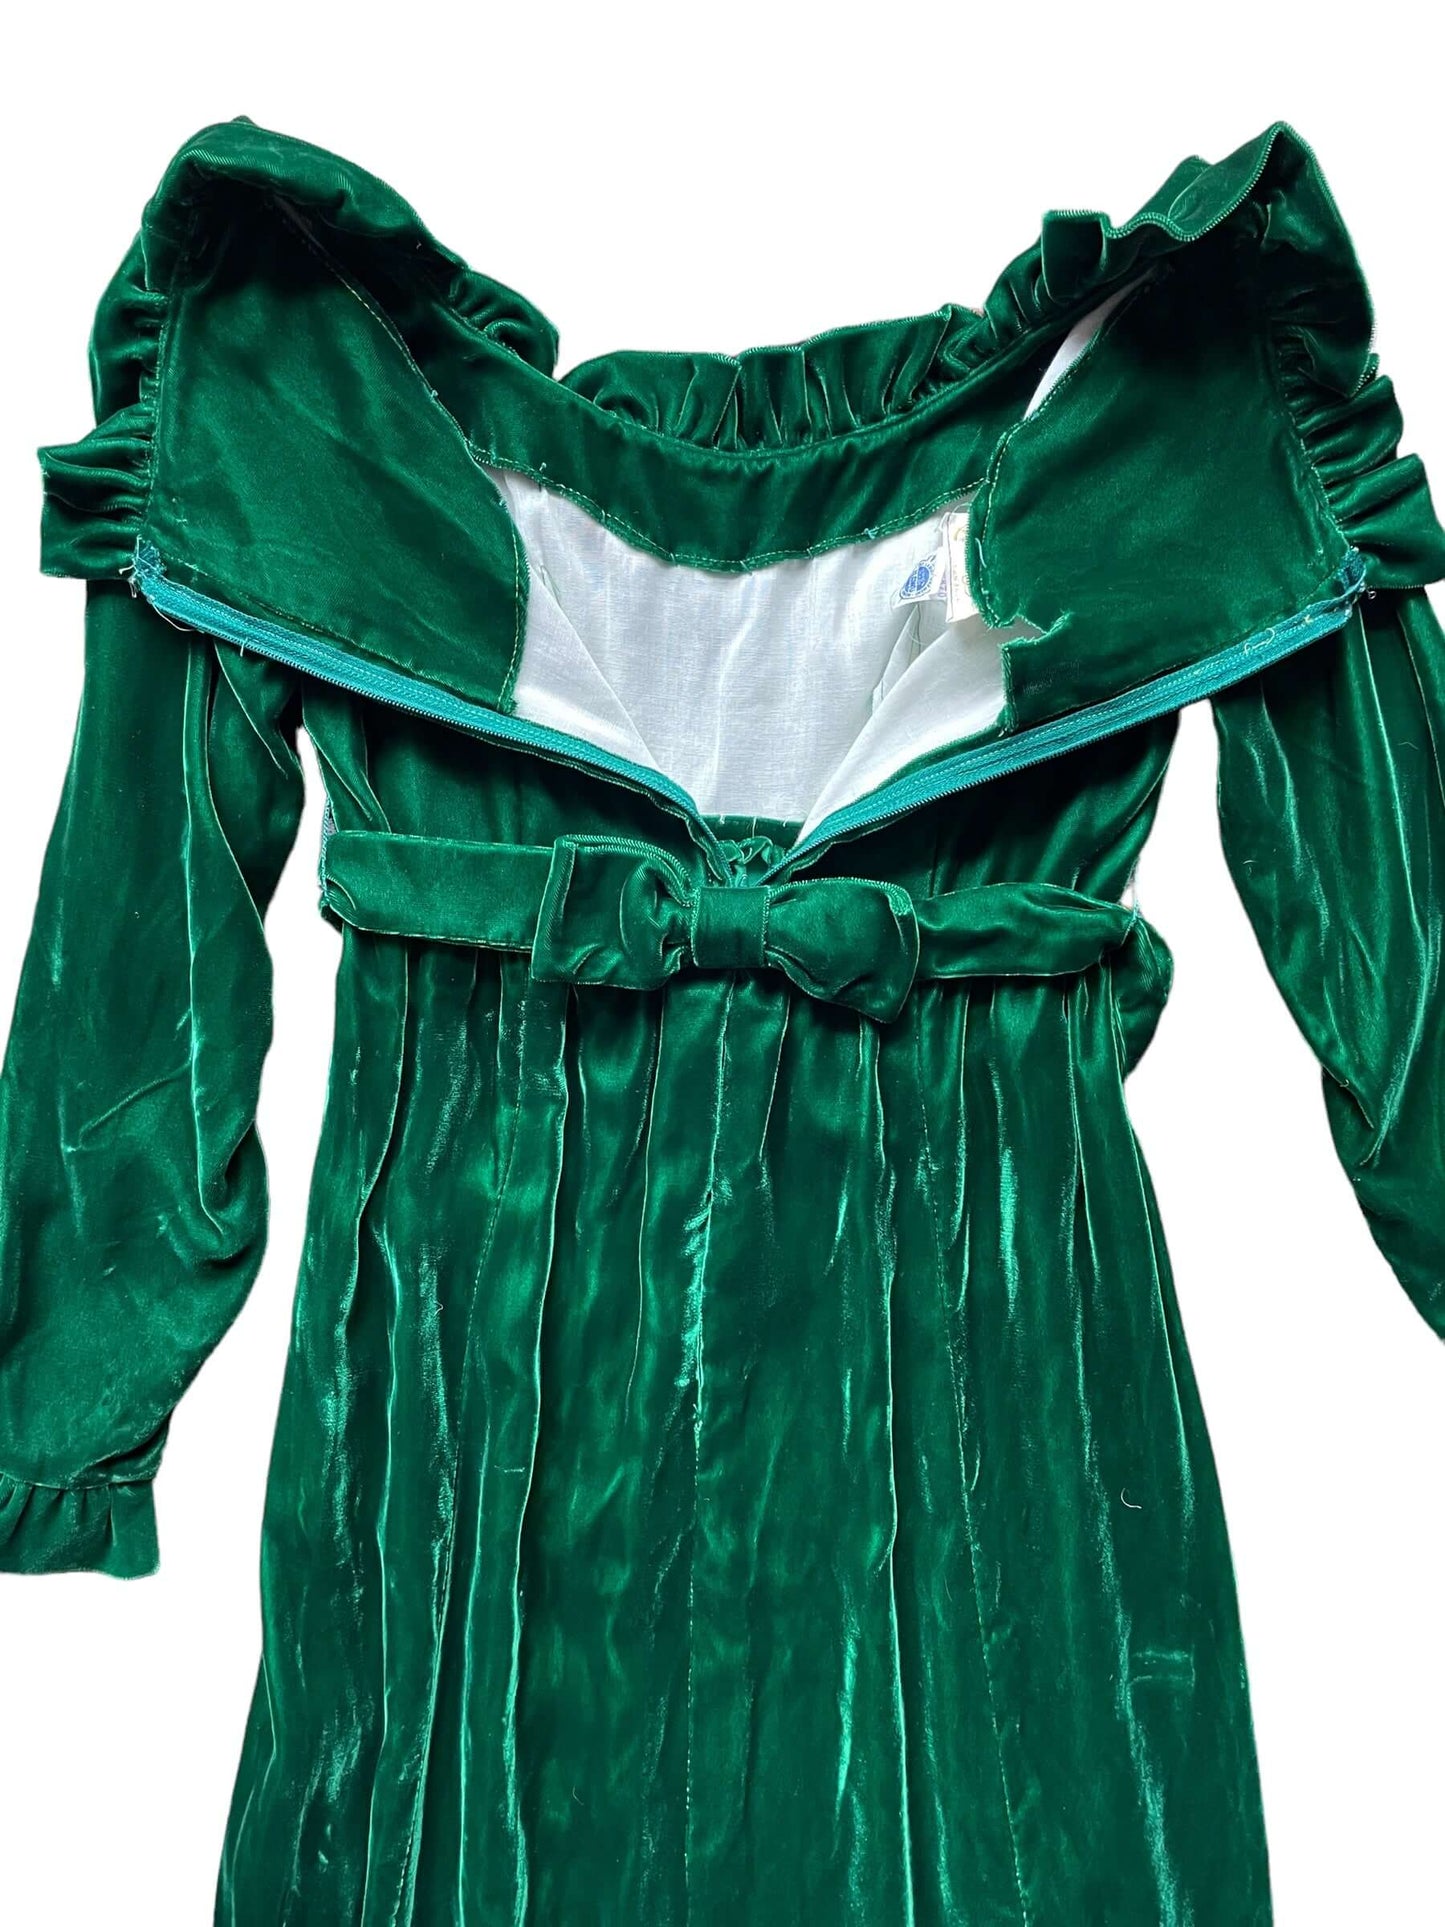 Open back view of Vintage 1960s Green Velvet Dress |  Barn Owl Vintage Dresses | Seattle Vintage Ladies Clothing